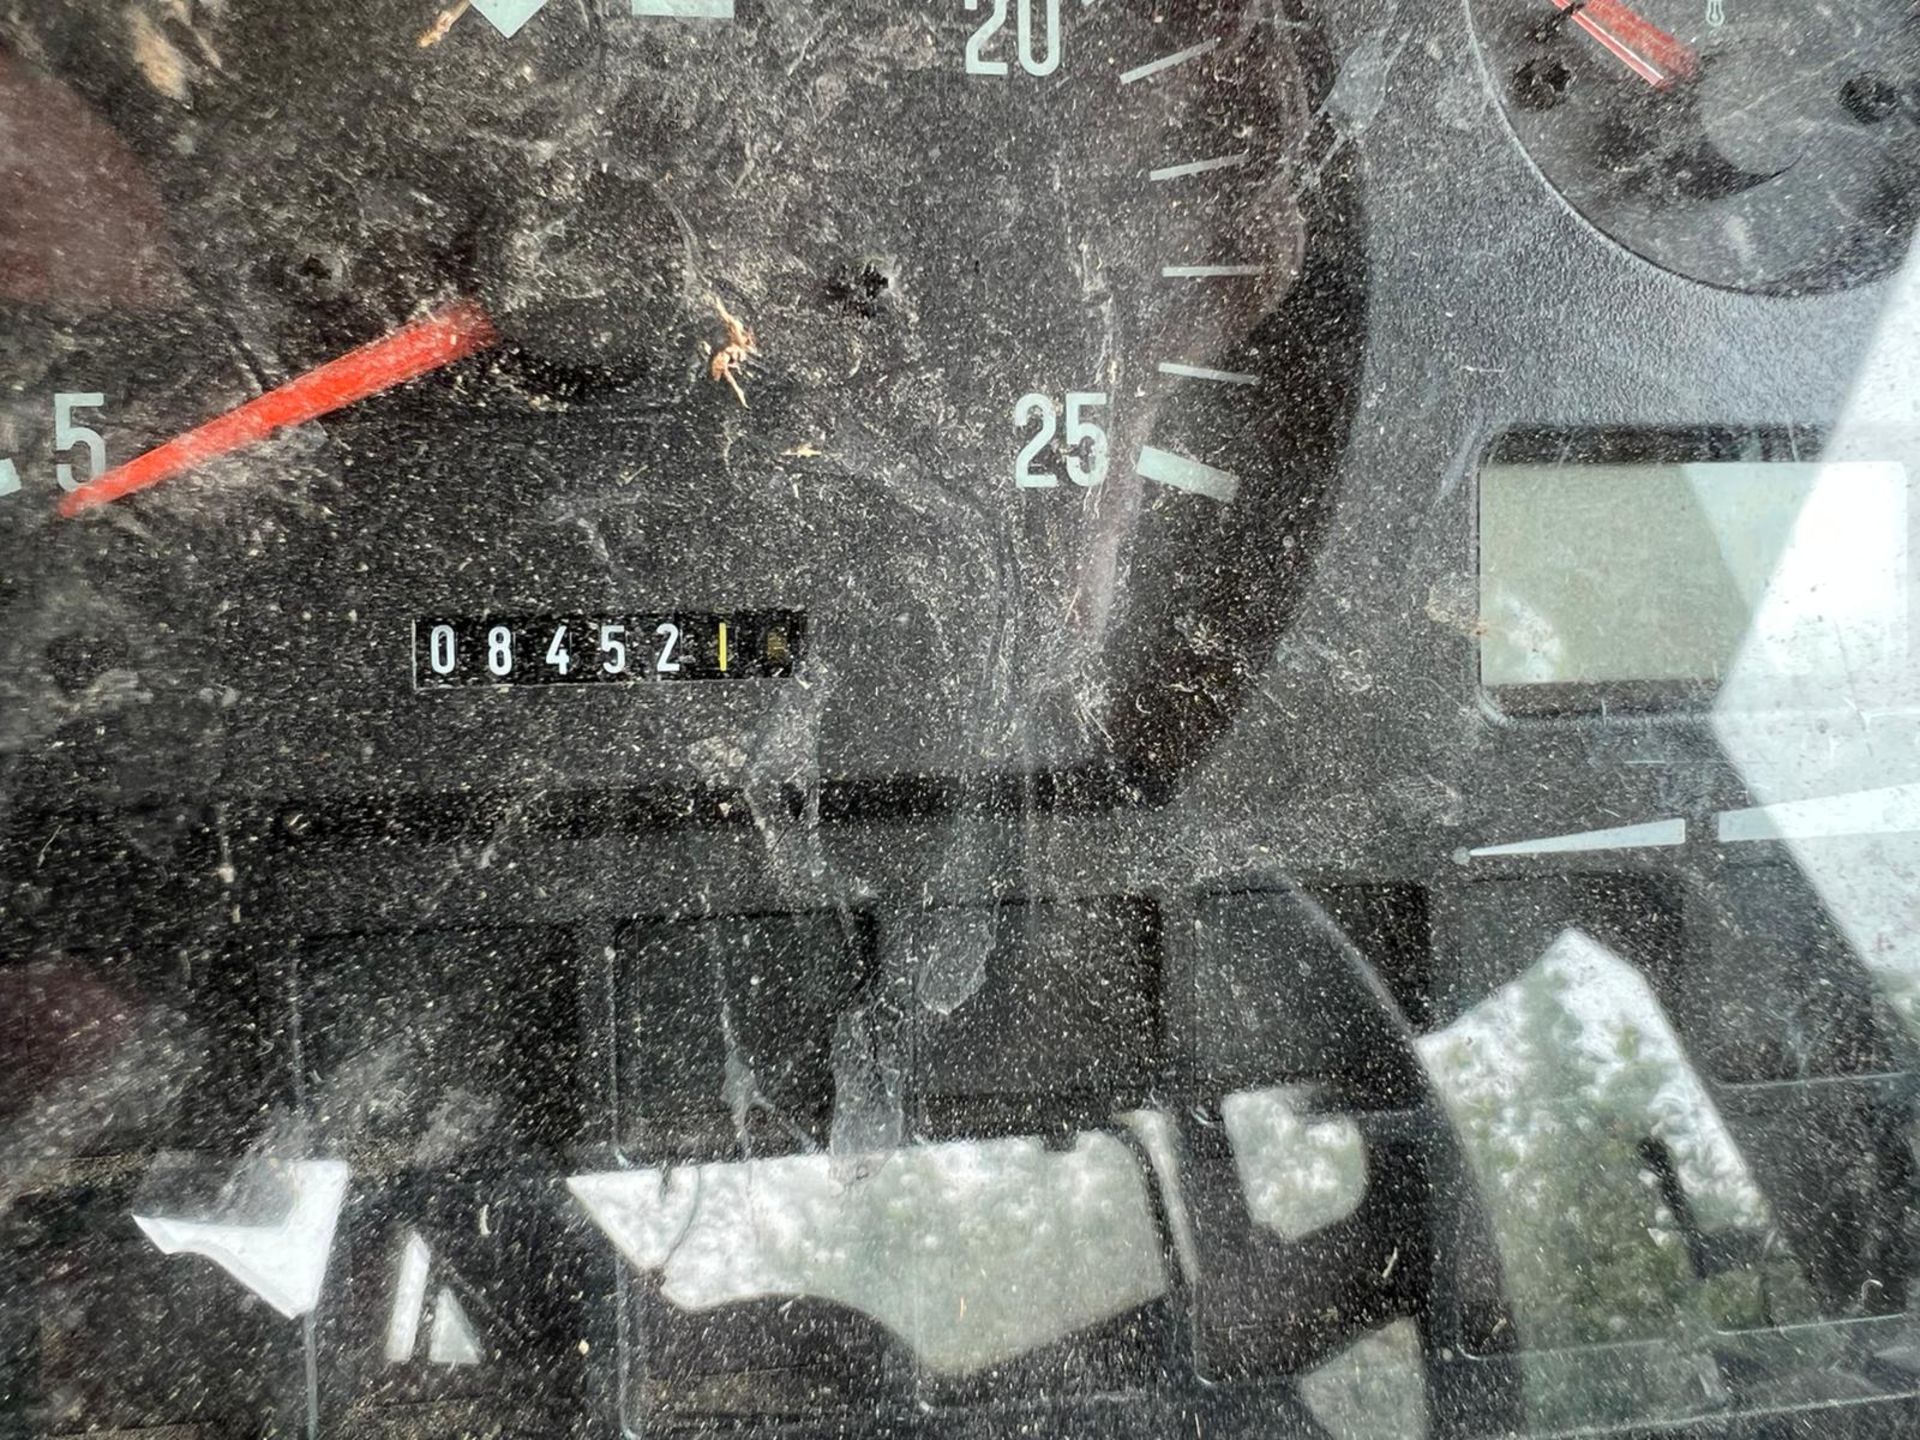 1999 MASSEY FERGUSON 6280 TRACTOR - Image 3 of 14